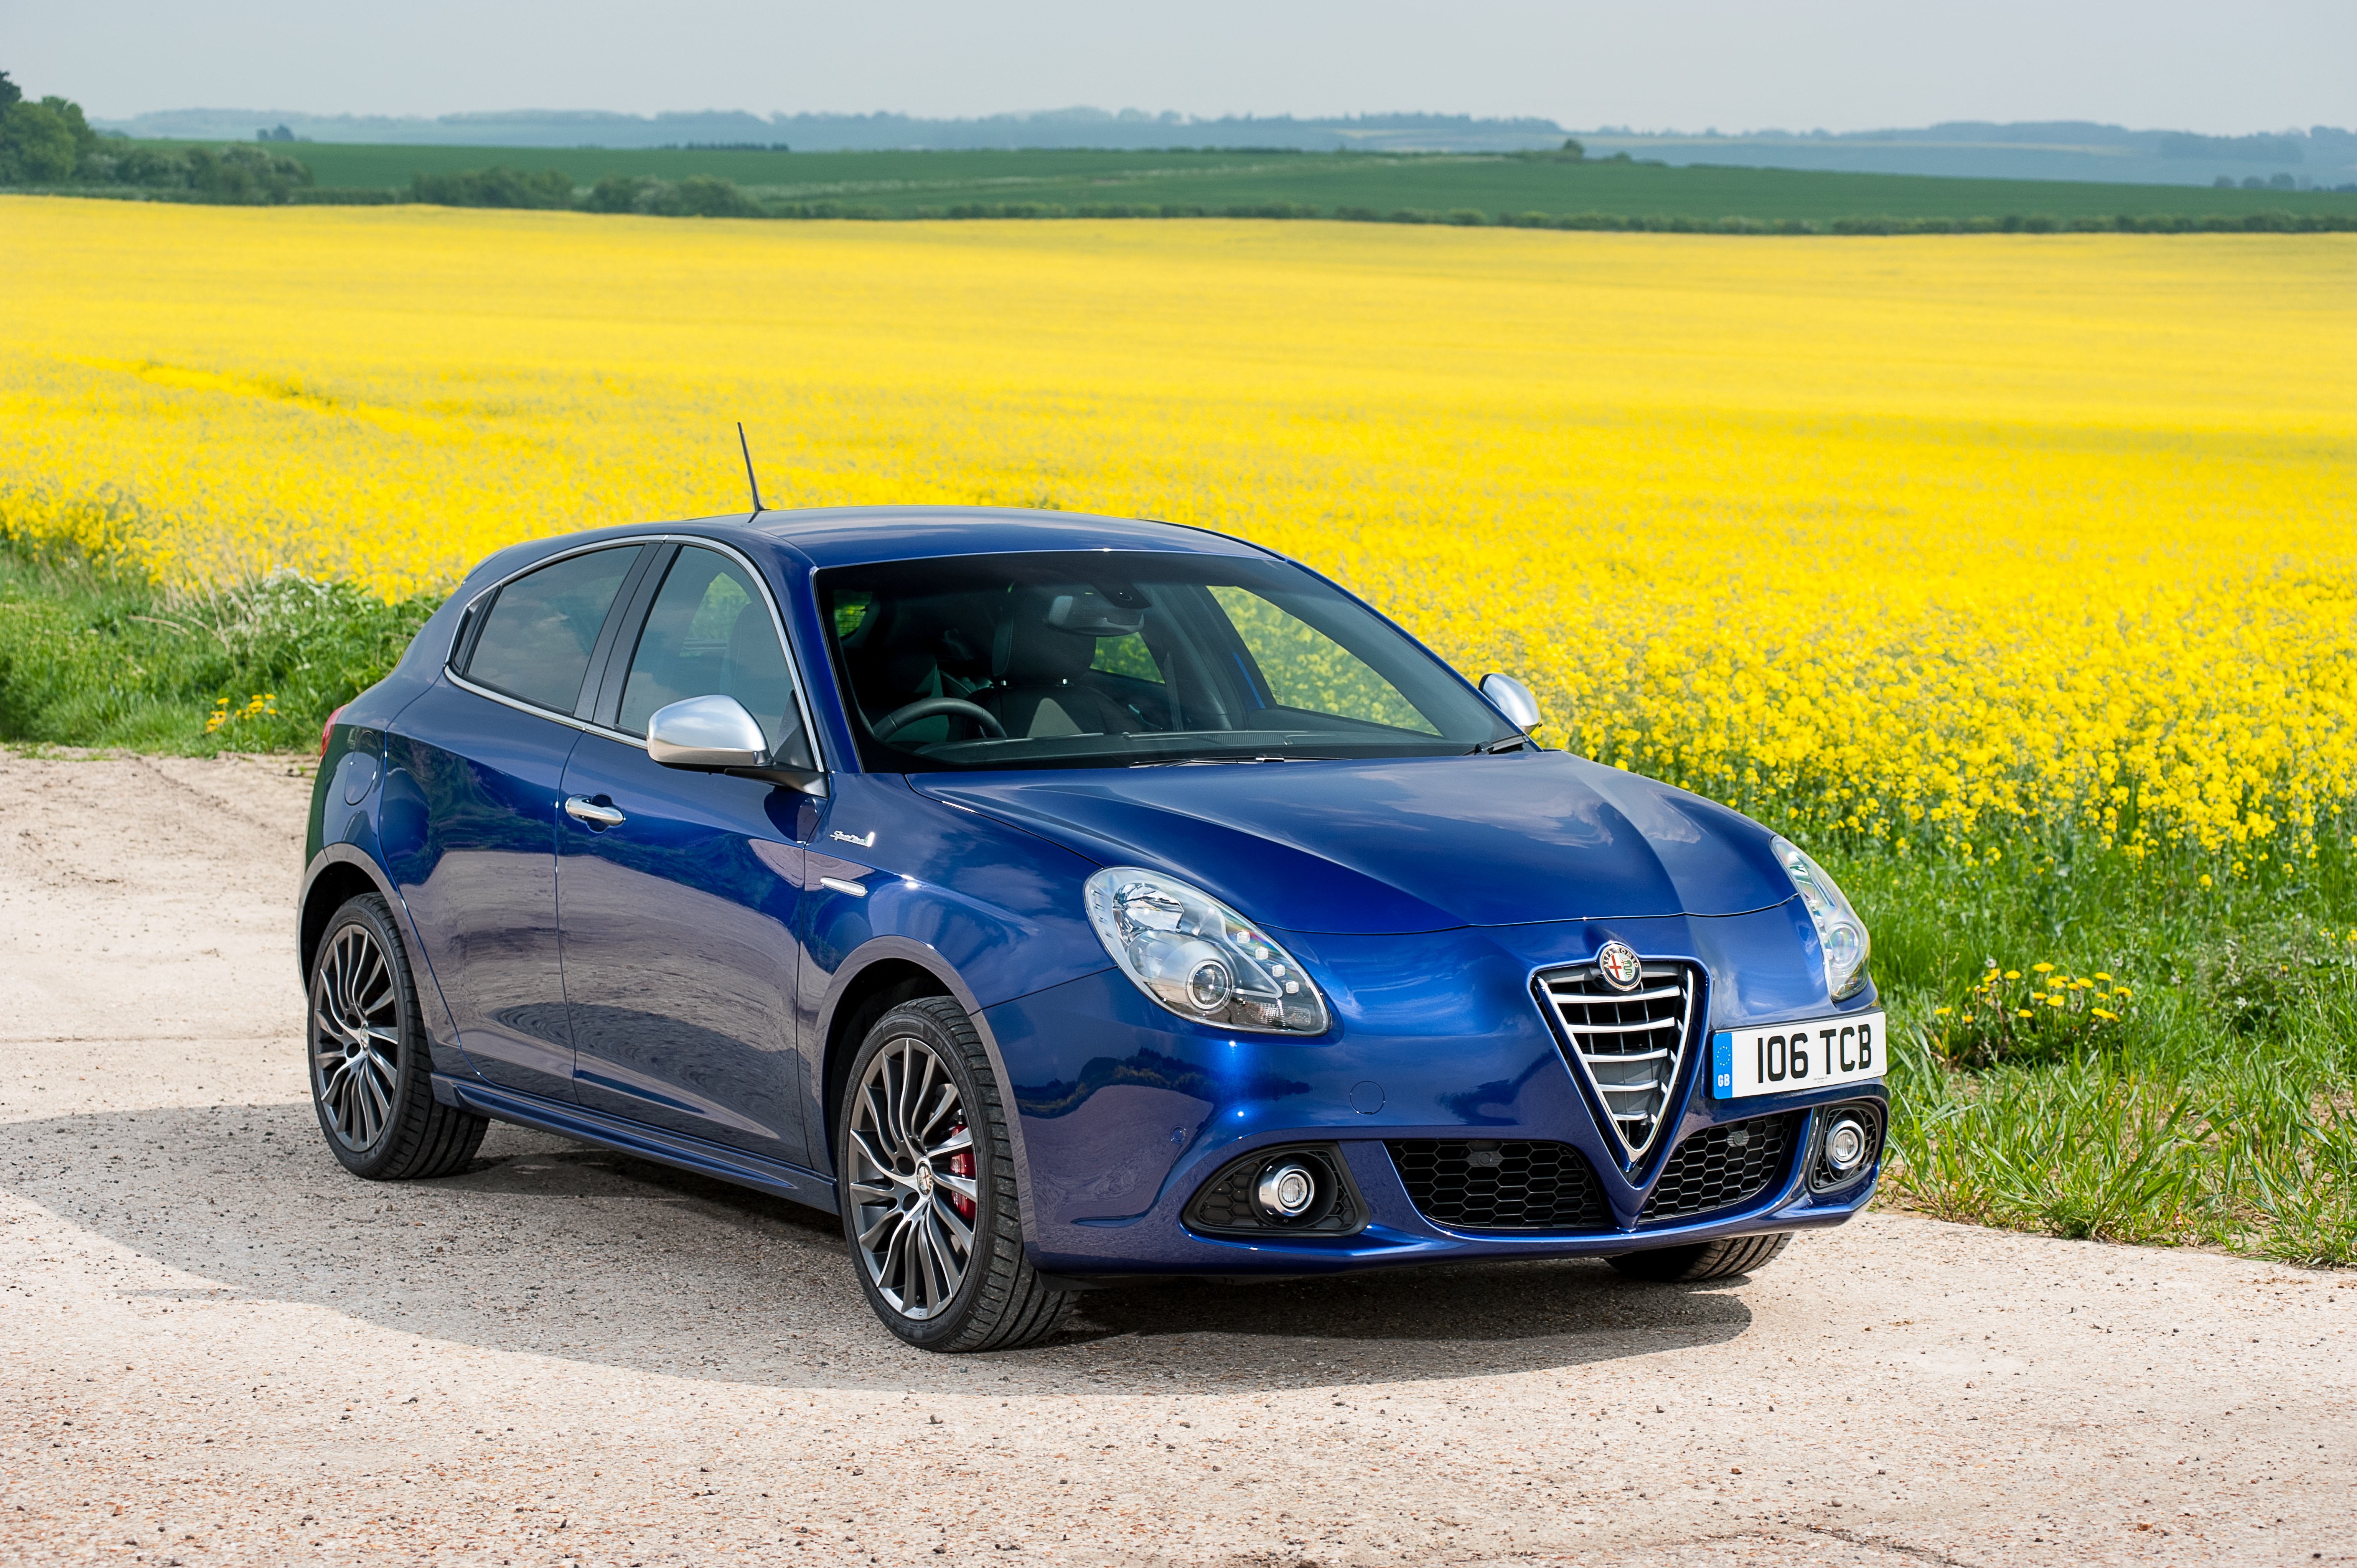 Alfa Romeo Giulietta Review: Exterior Front